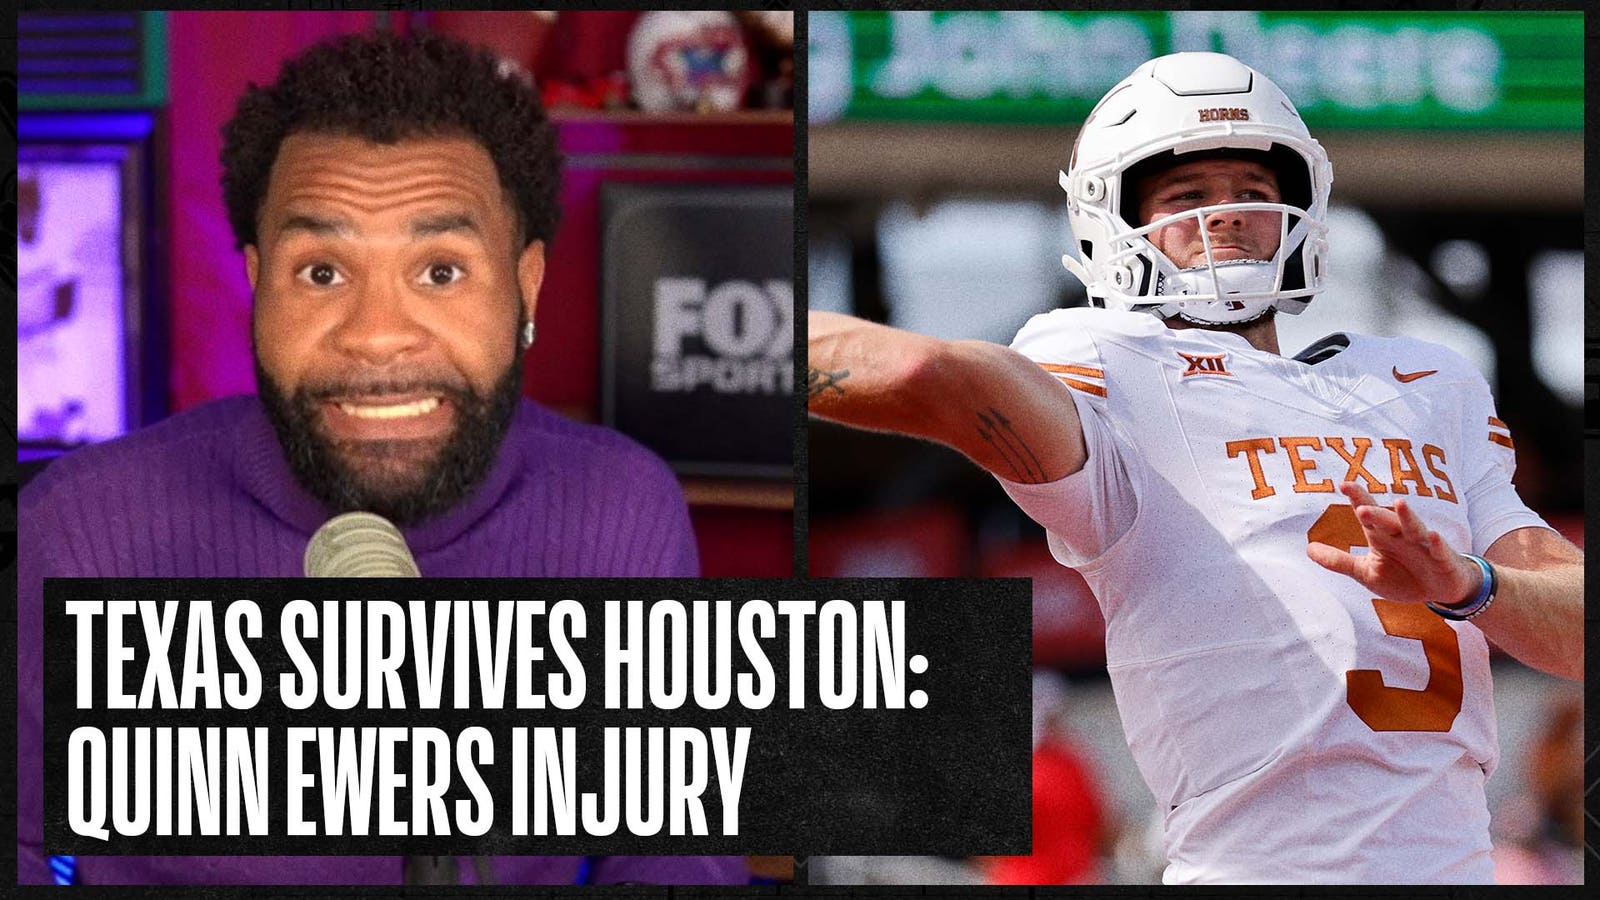 Texas survives Houston while losing Quinn Ewers